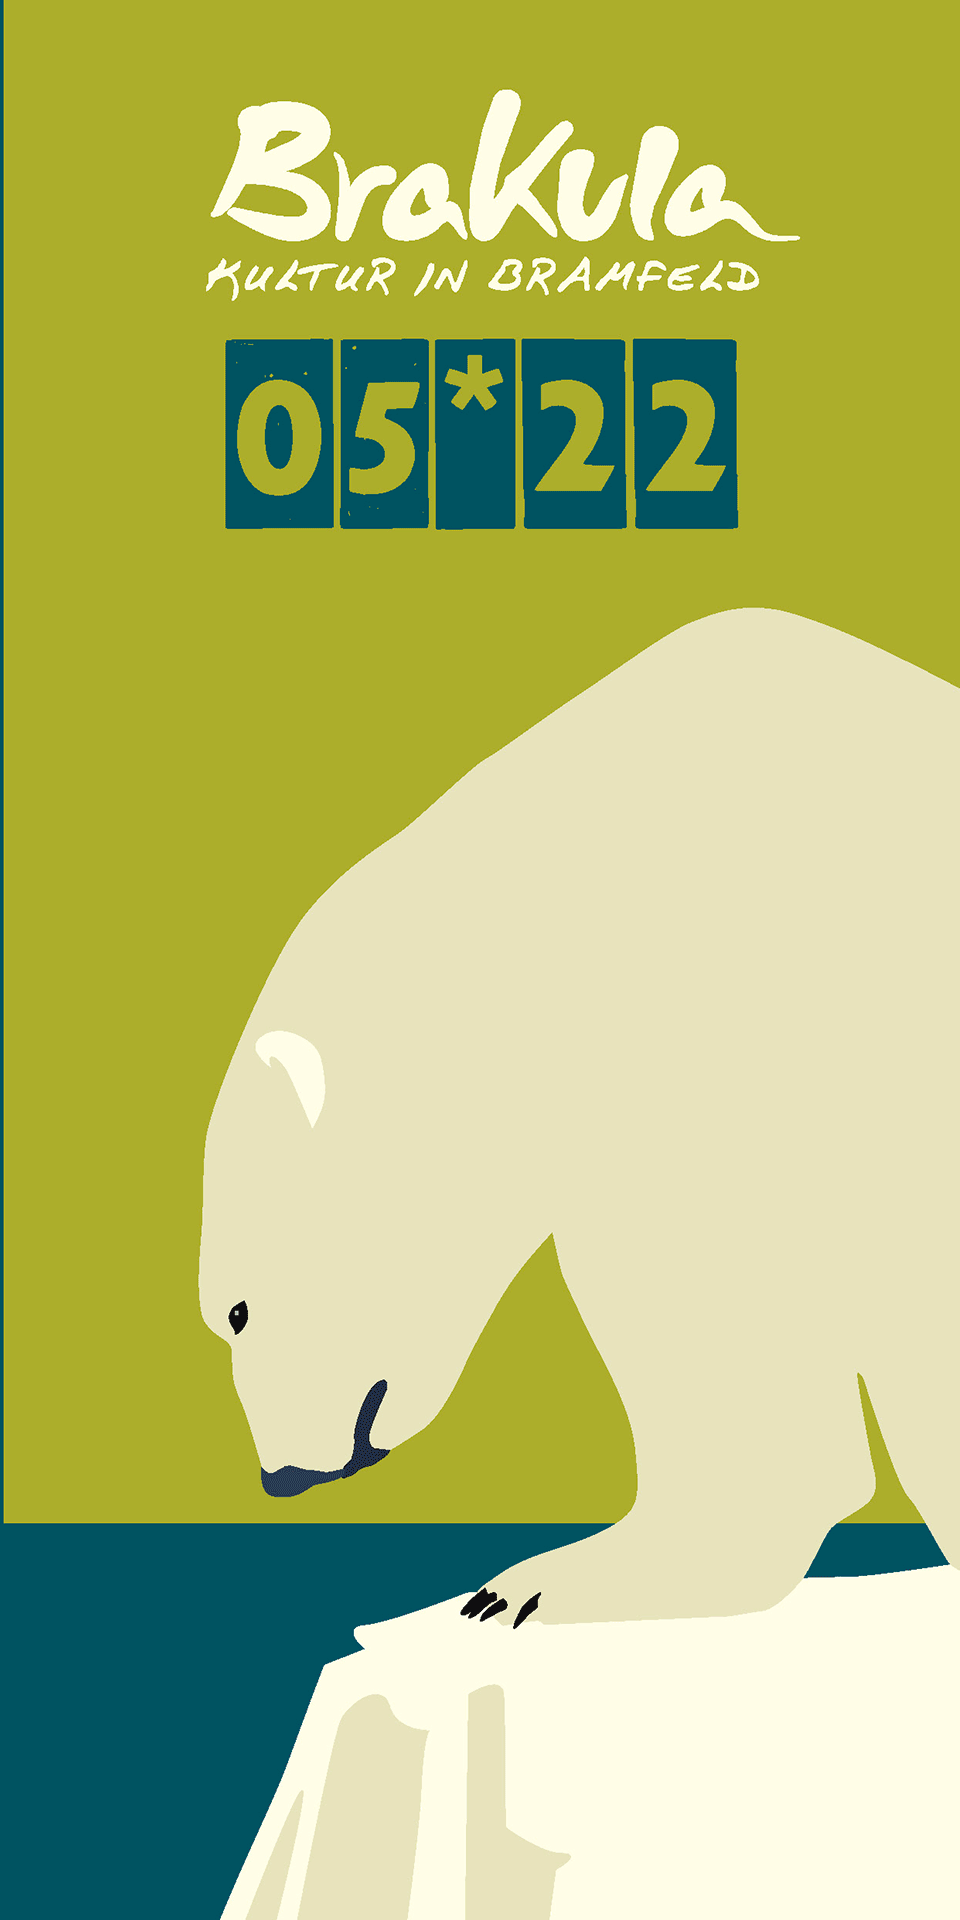 Brakula Programm Eisbären 05